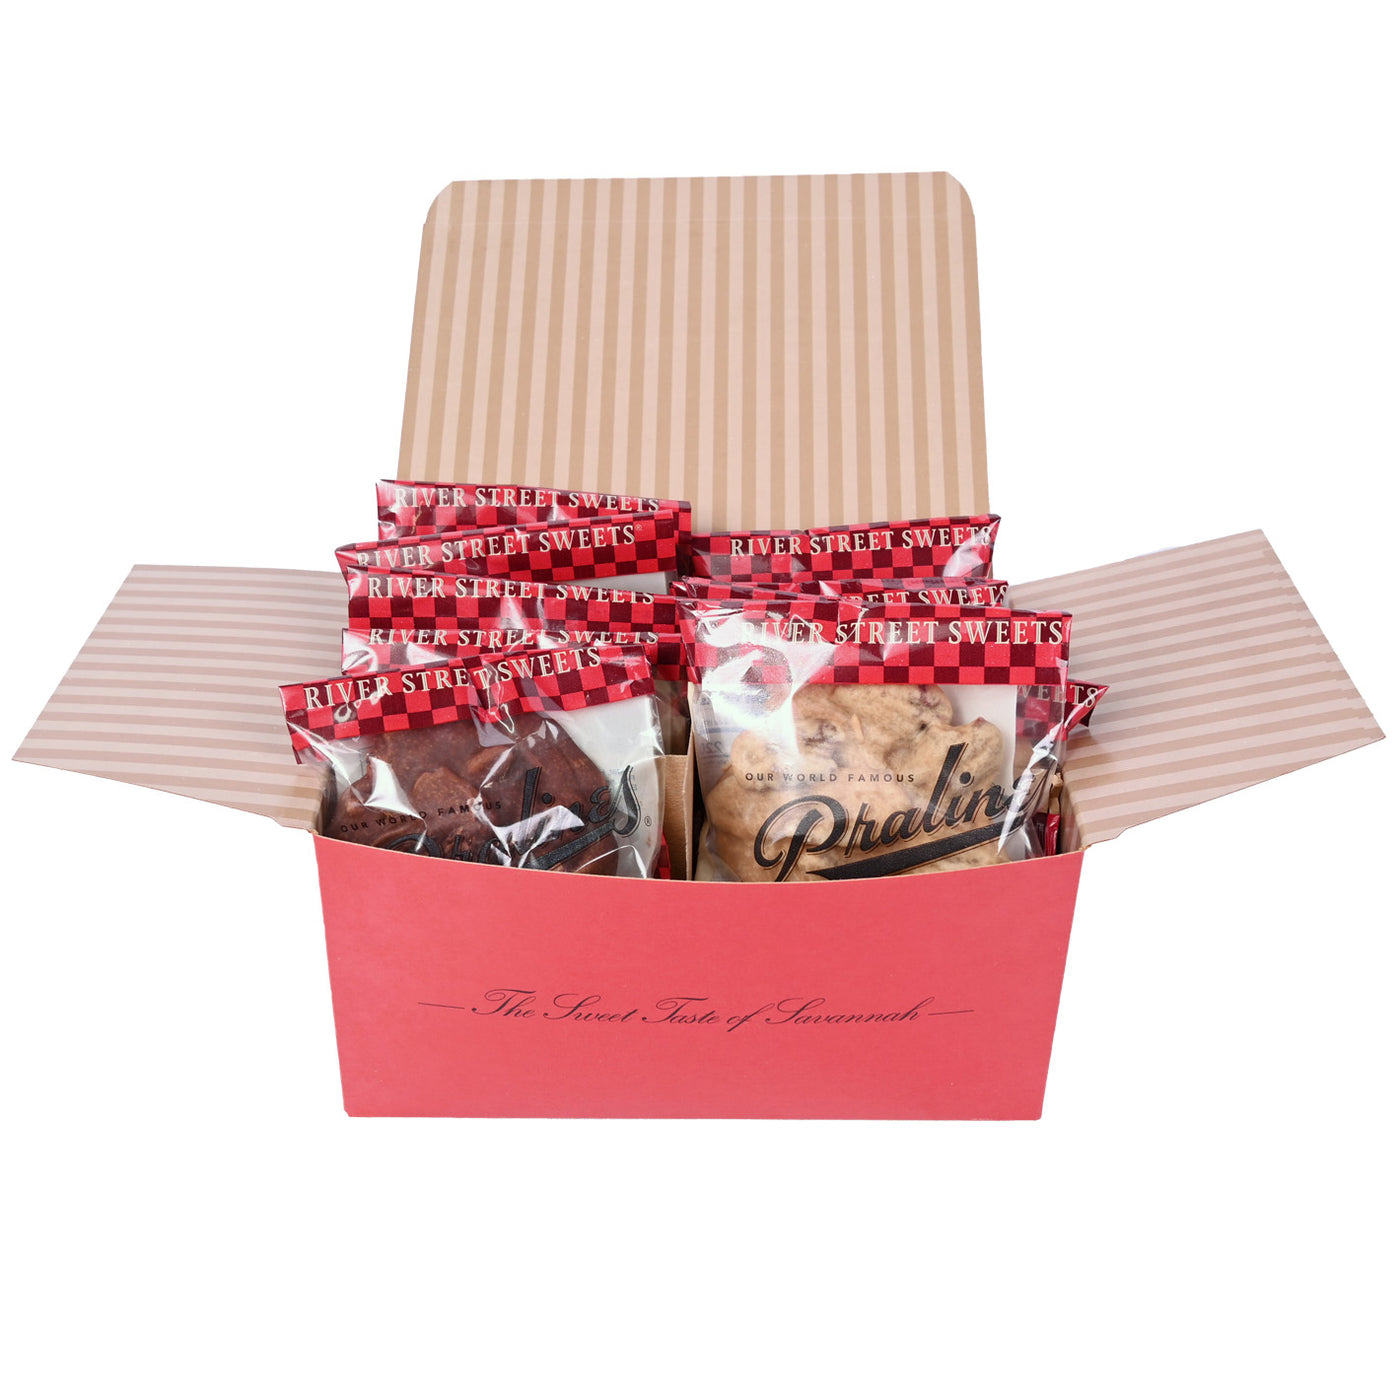 Chocolate & Original Pralines - Classic Box